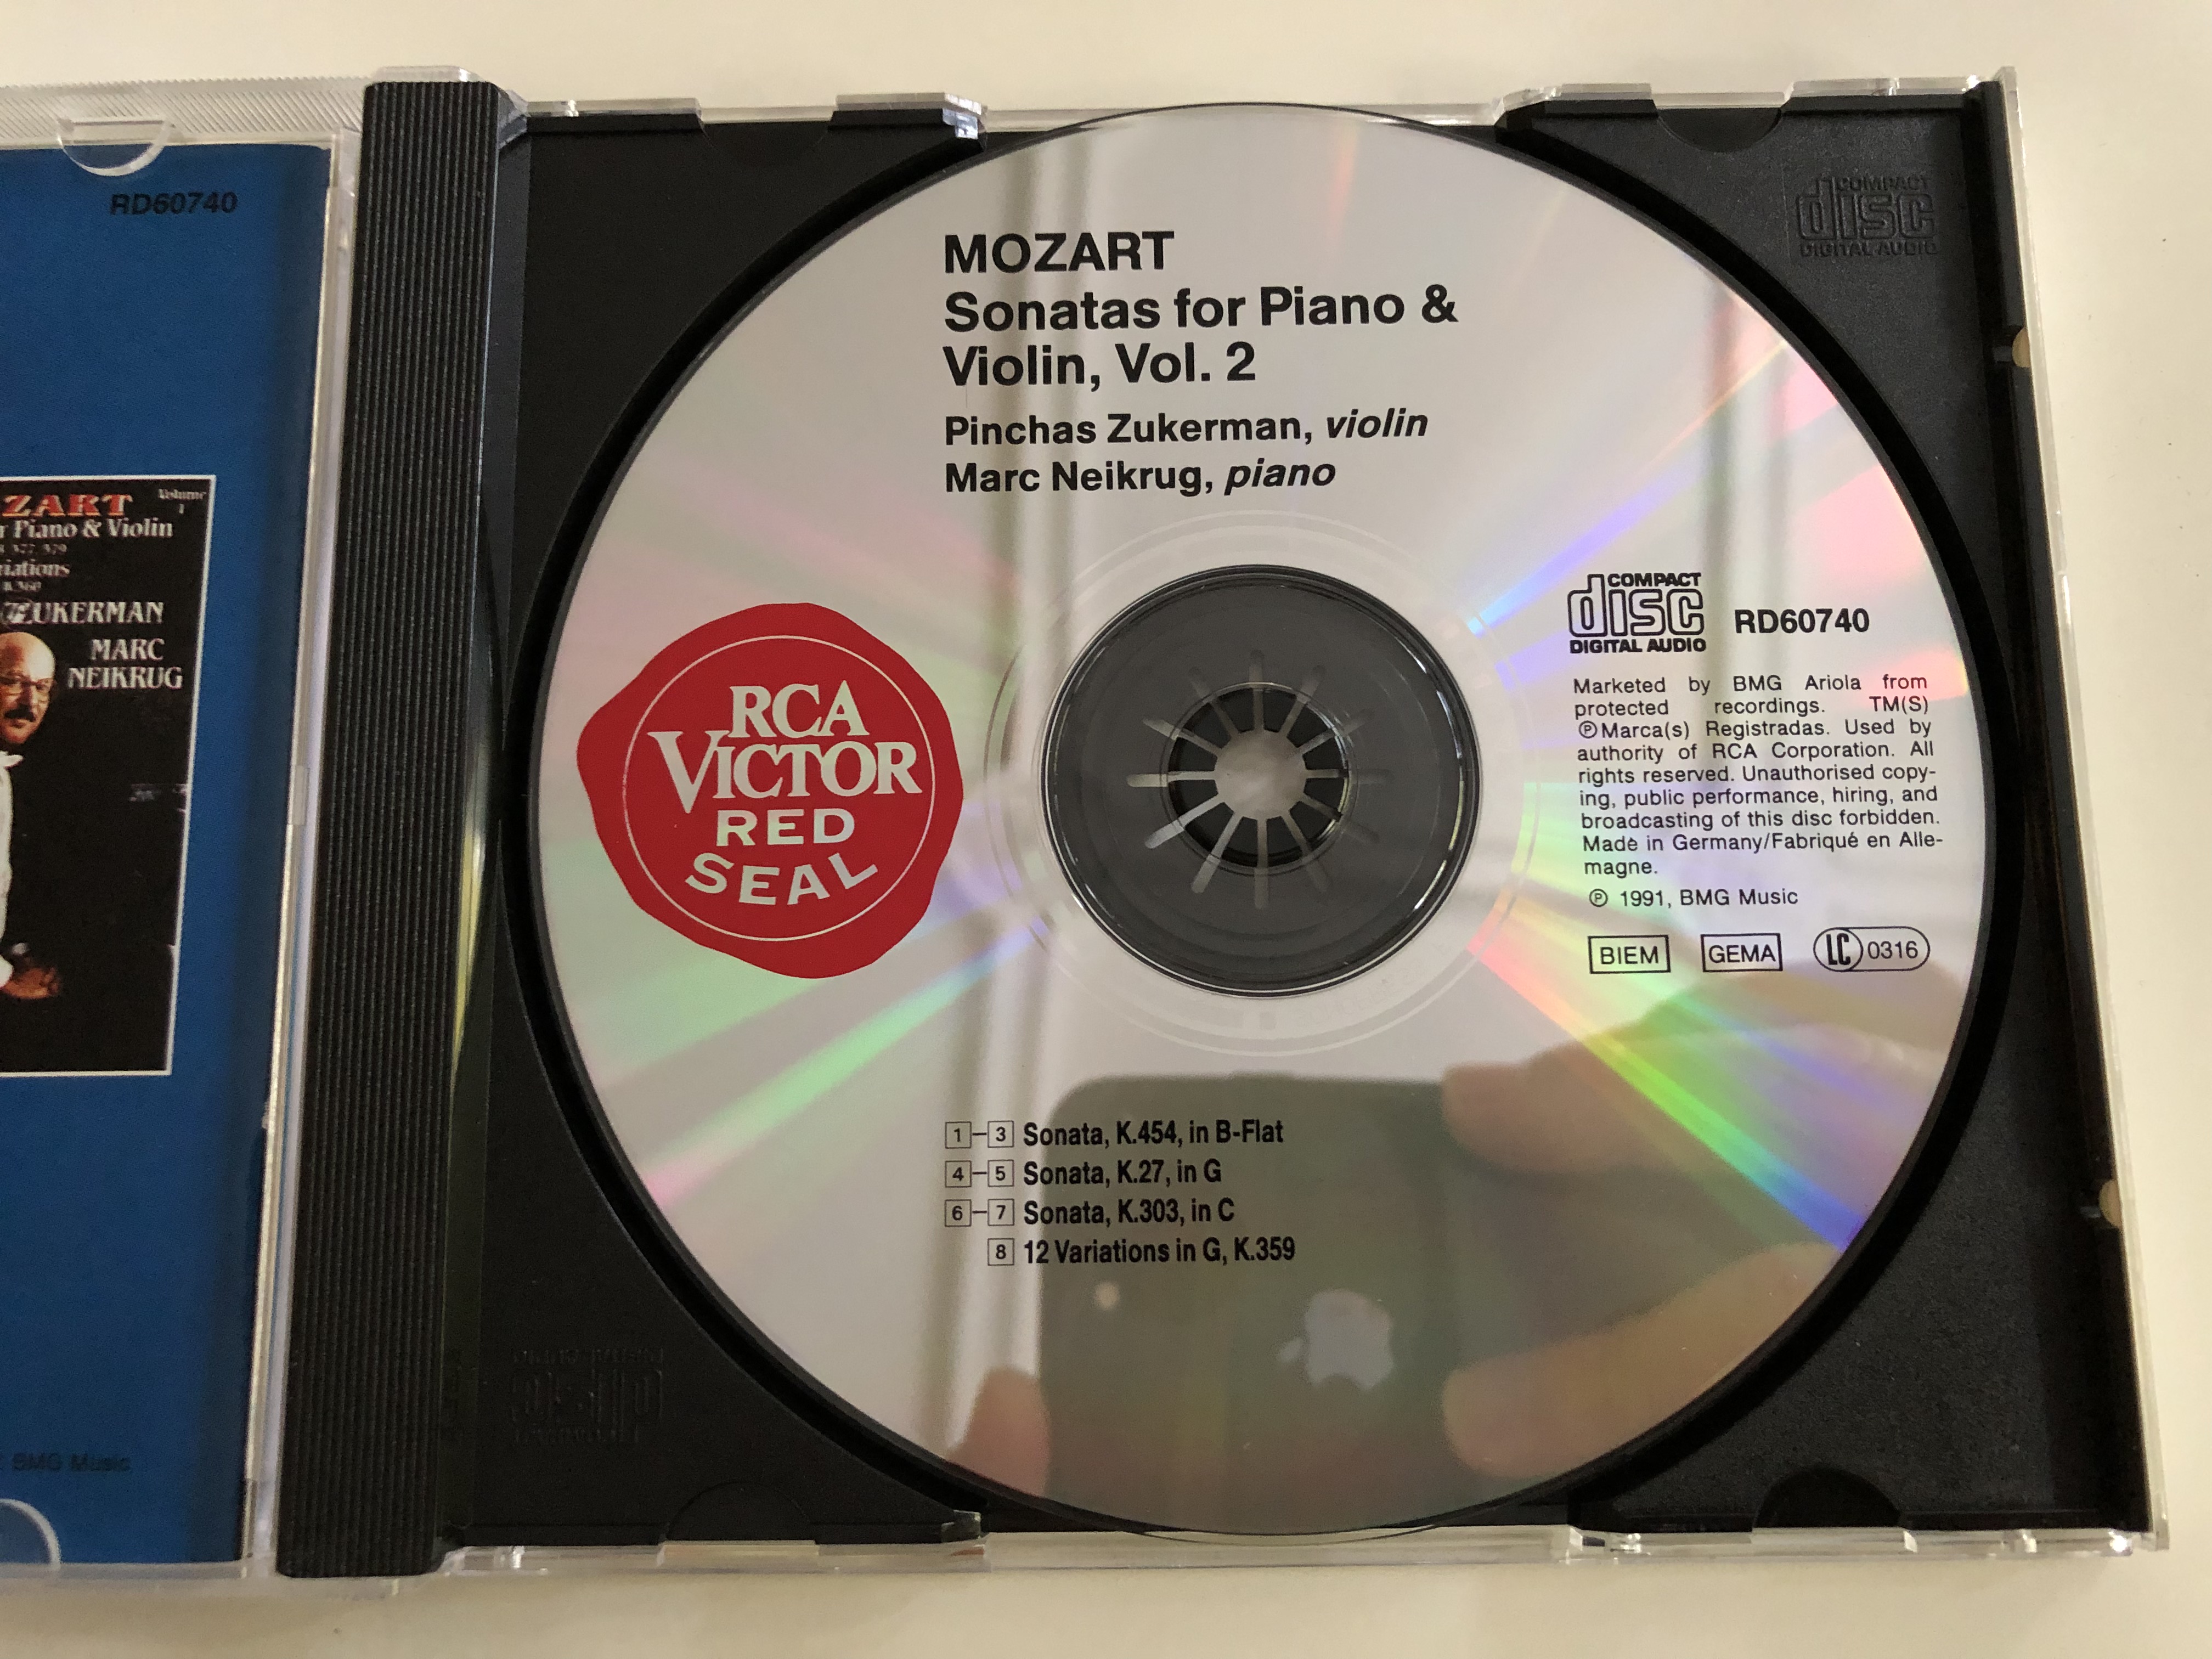 mozart-sonatas-for-piano-violin-k.27-303-454-variations-k.359-pinchas-zukerman-marc-neikrug-volume-2-rca-victor-red-seal-audio-cd-1991-rd60740-6-.jpg